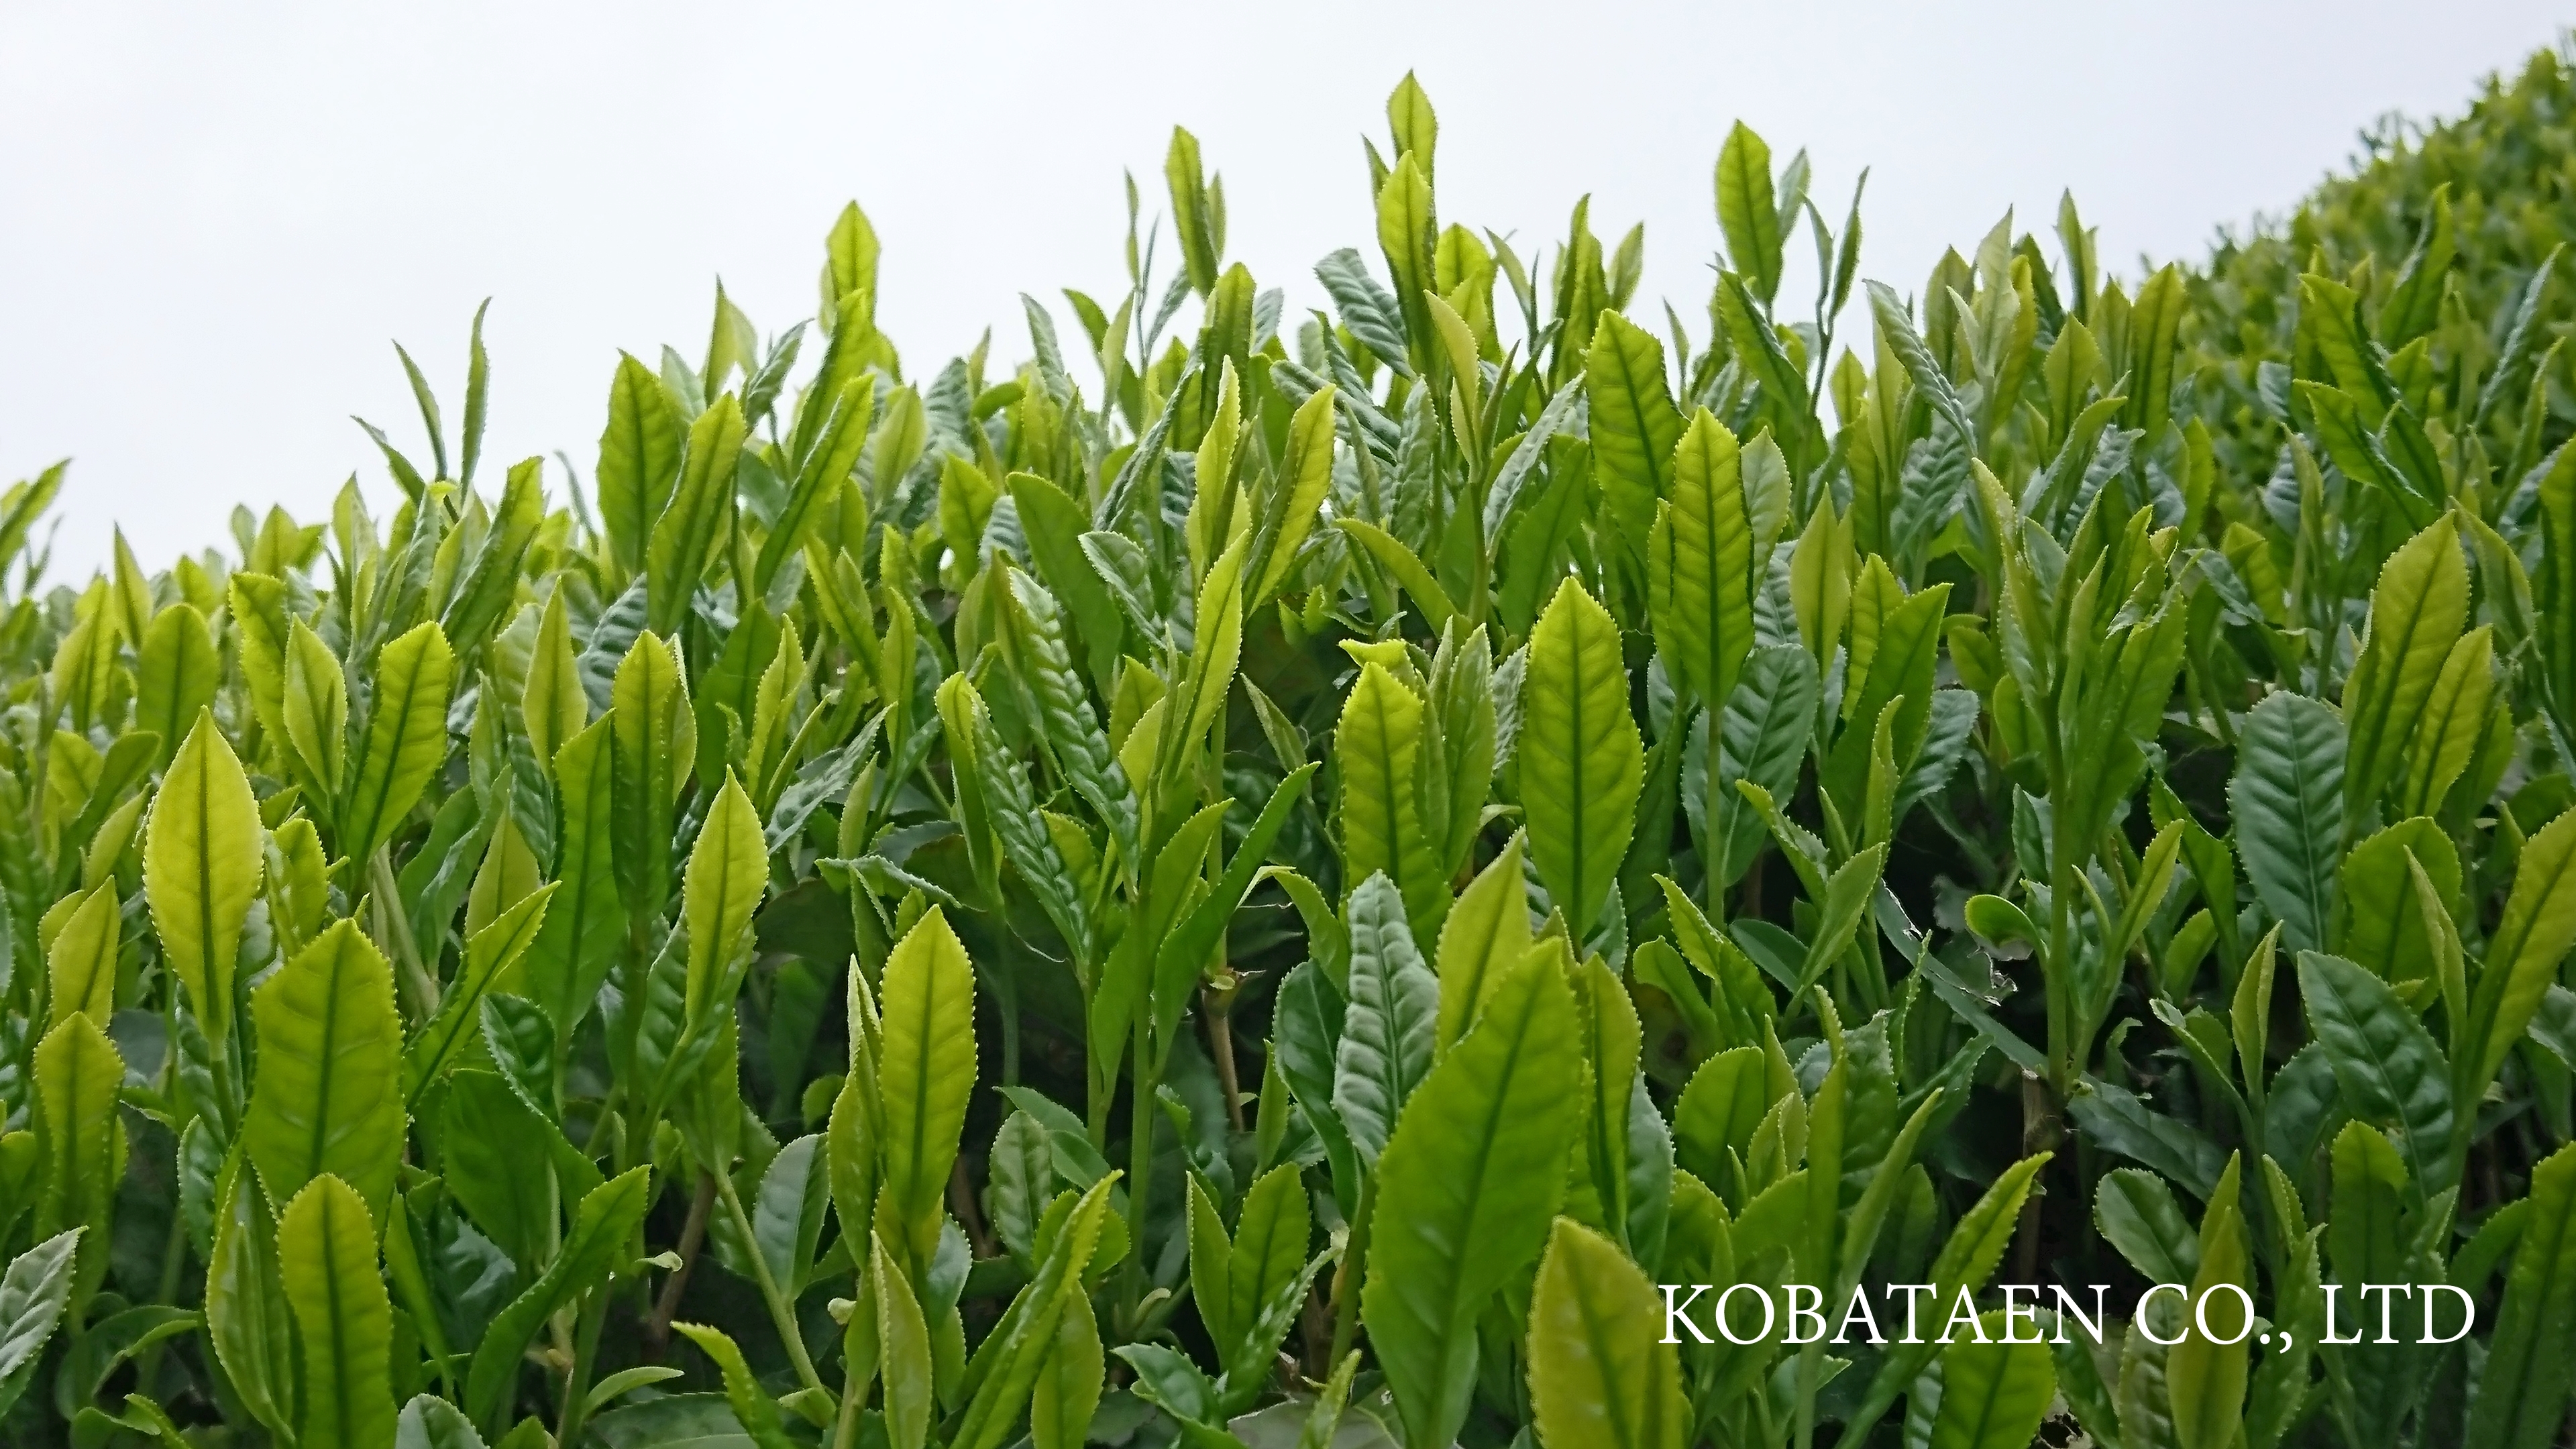 Japanese Green Tea Karigane Made in Japan Kyoto